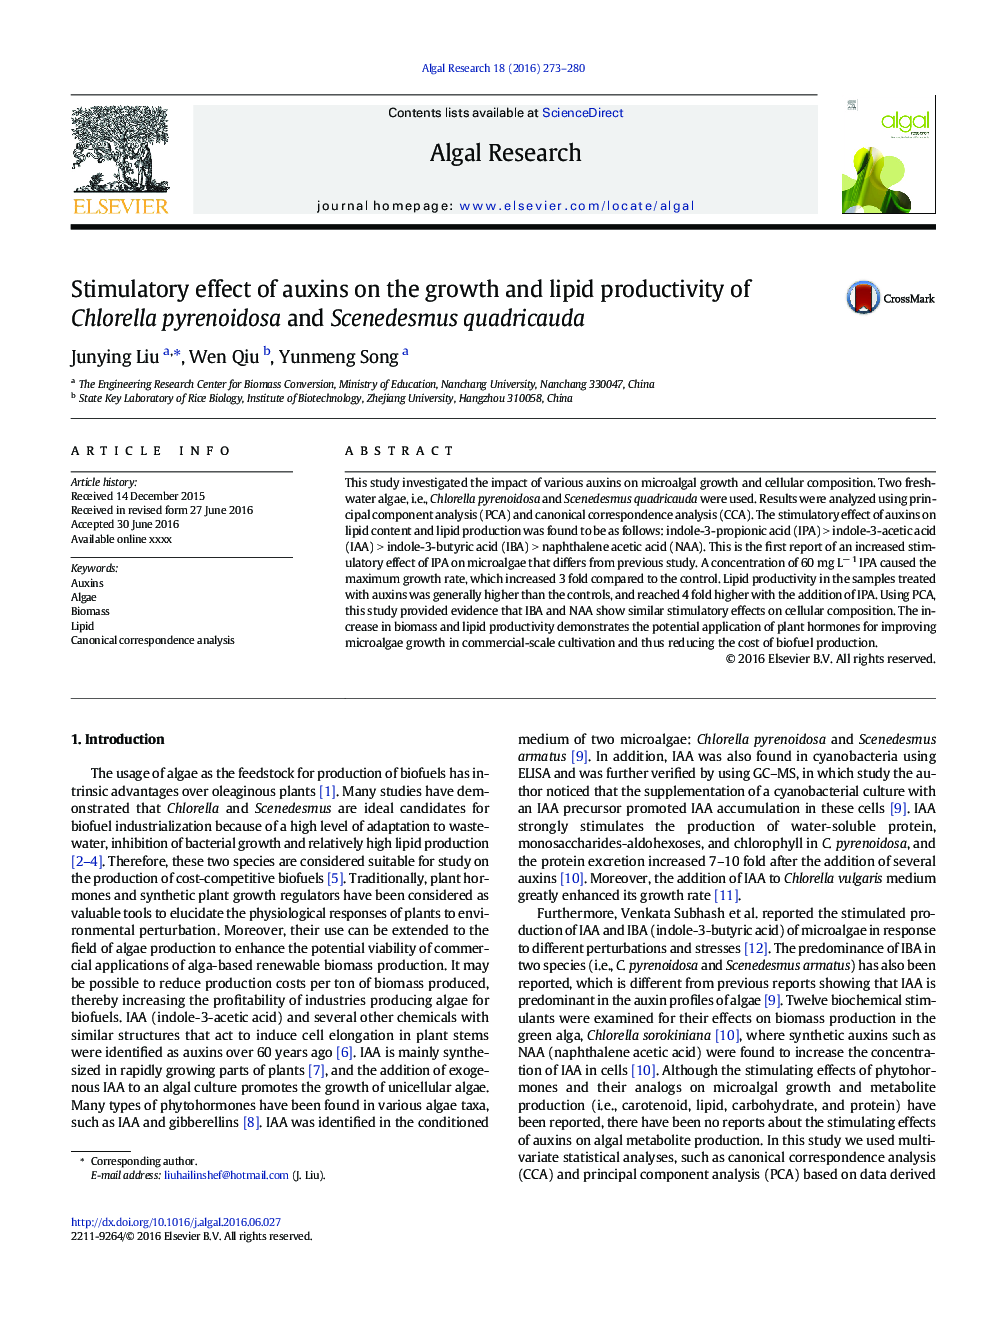 Stimulatory effect of auxins on the growth and lipid productivity of Chlorella pyrenoidosa and Scenedesmus quadricauda